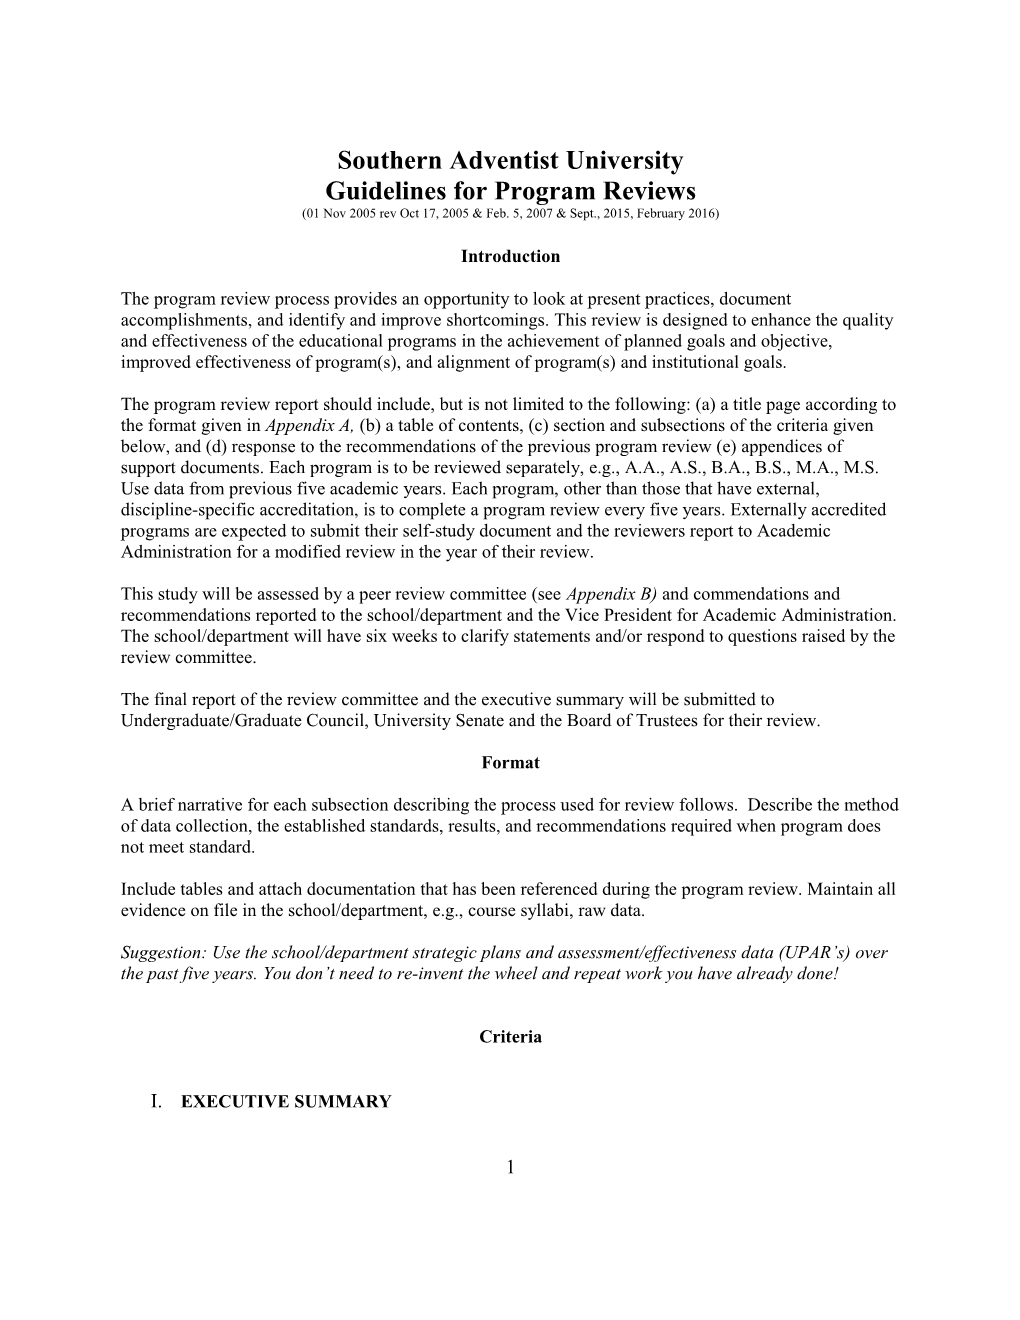 Guidelines for Program Reviews